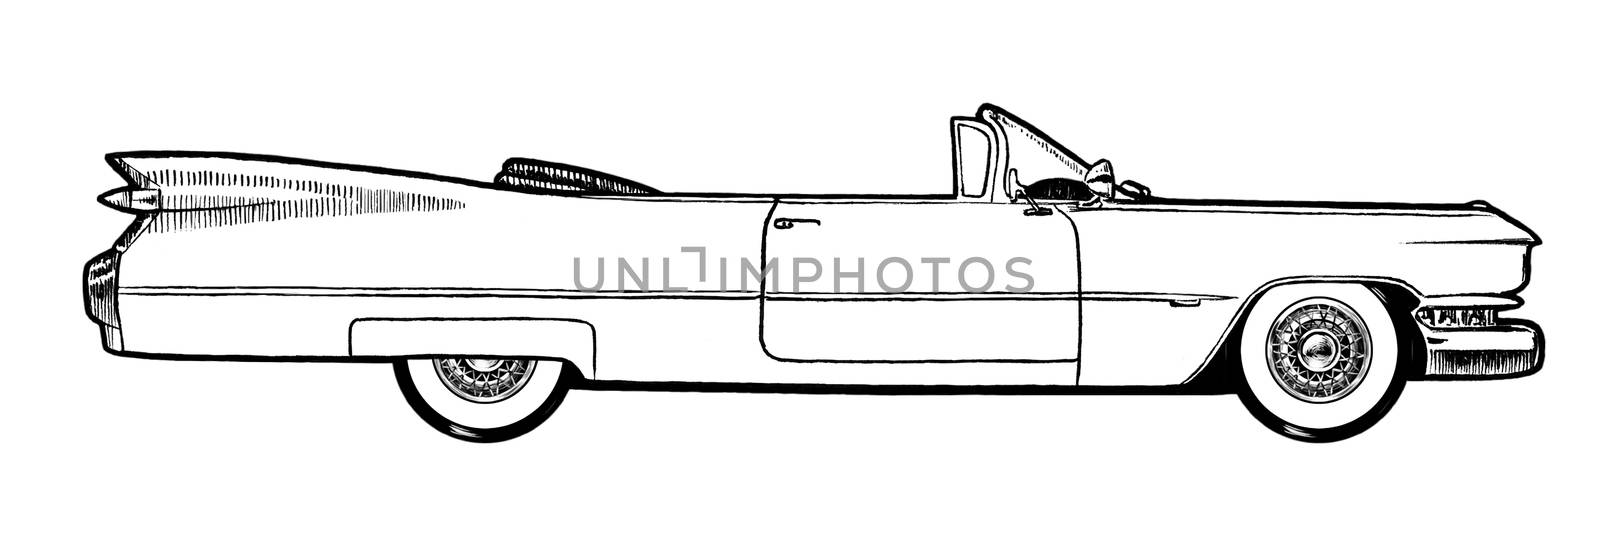 White Authentic 1959 Classic Retro Car isolated on white background. Digital painting cartoon style illustration.